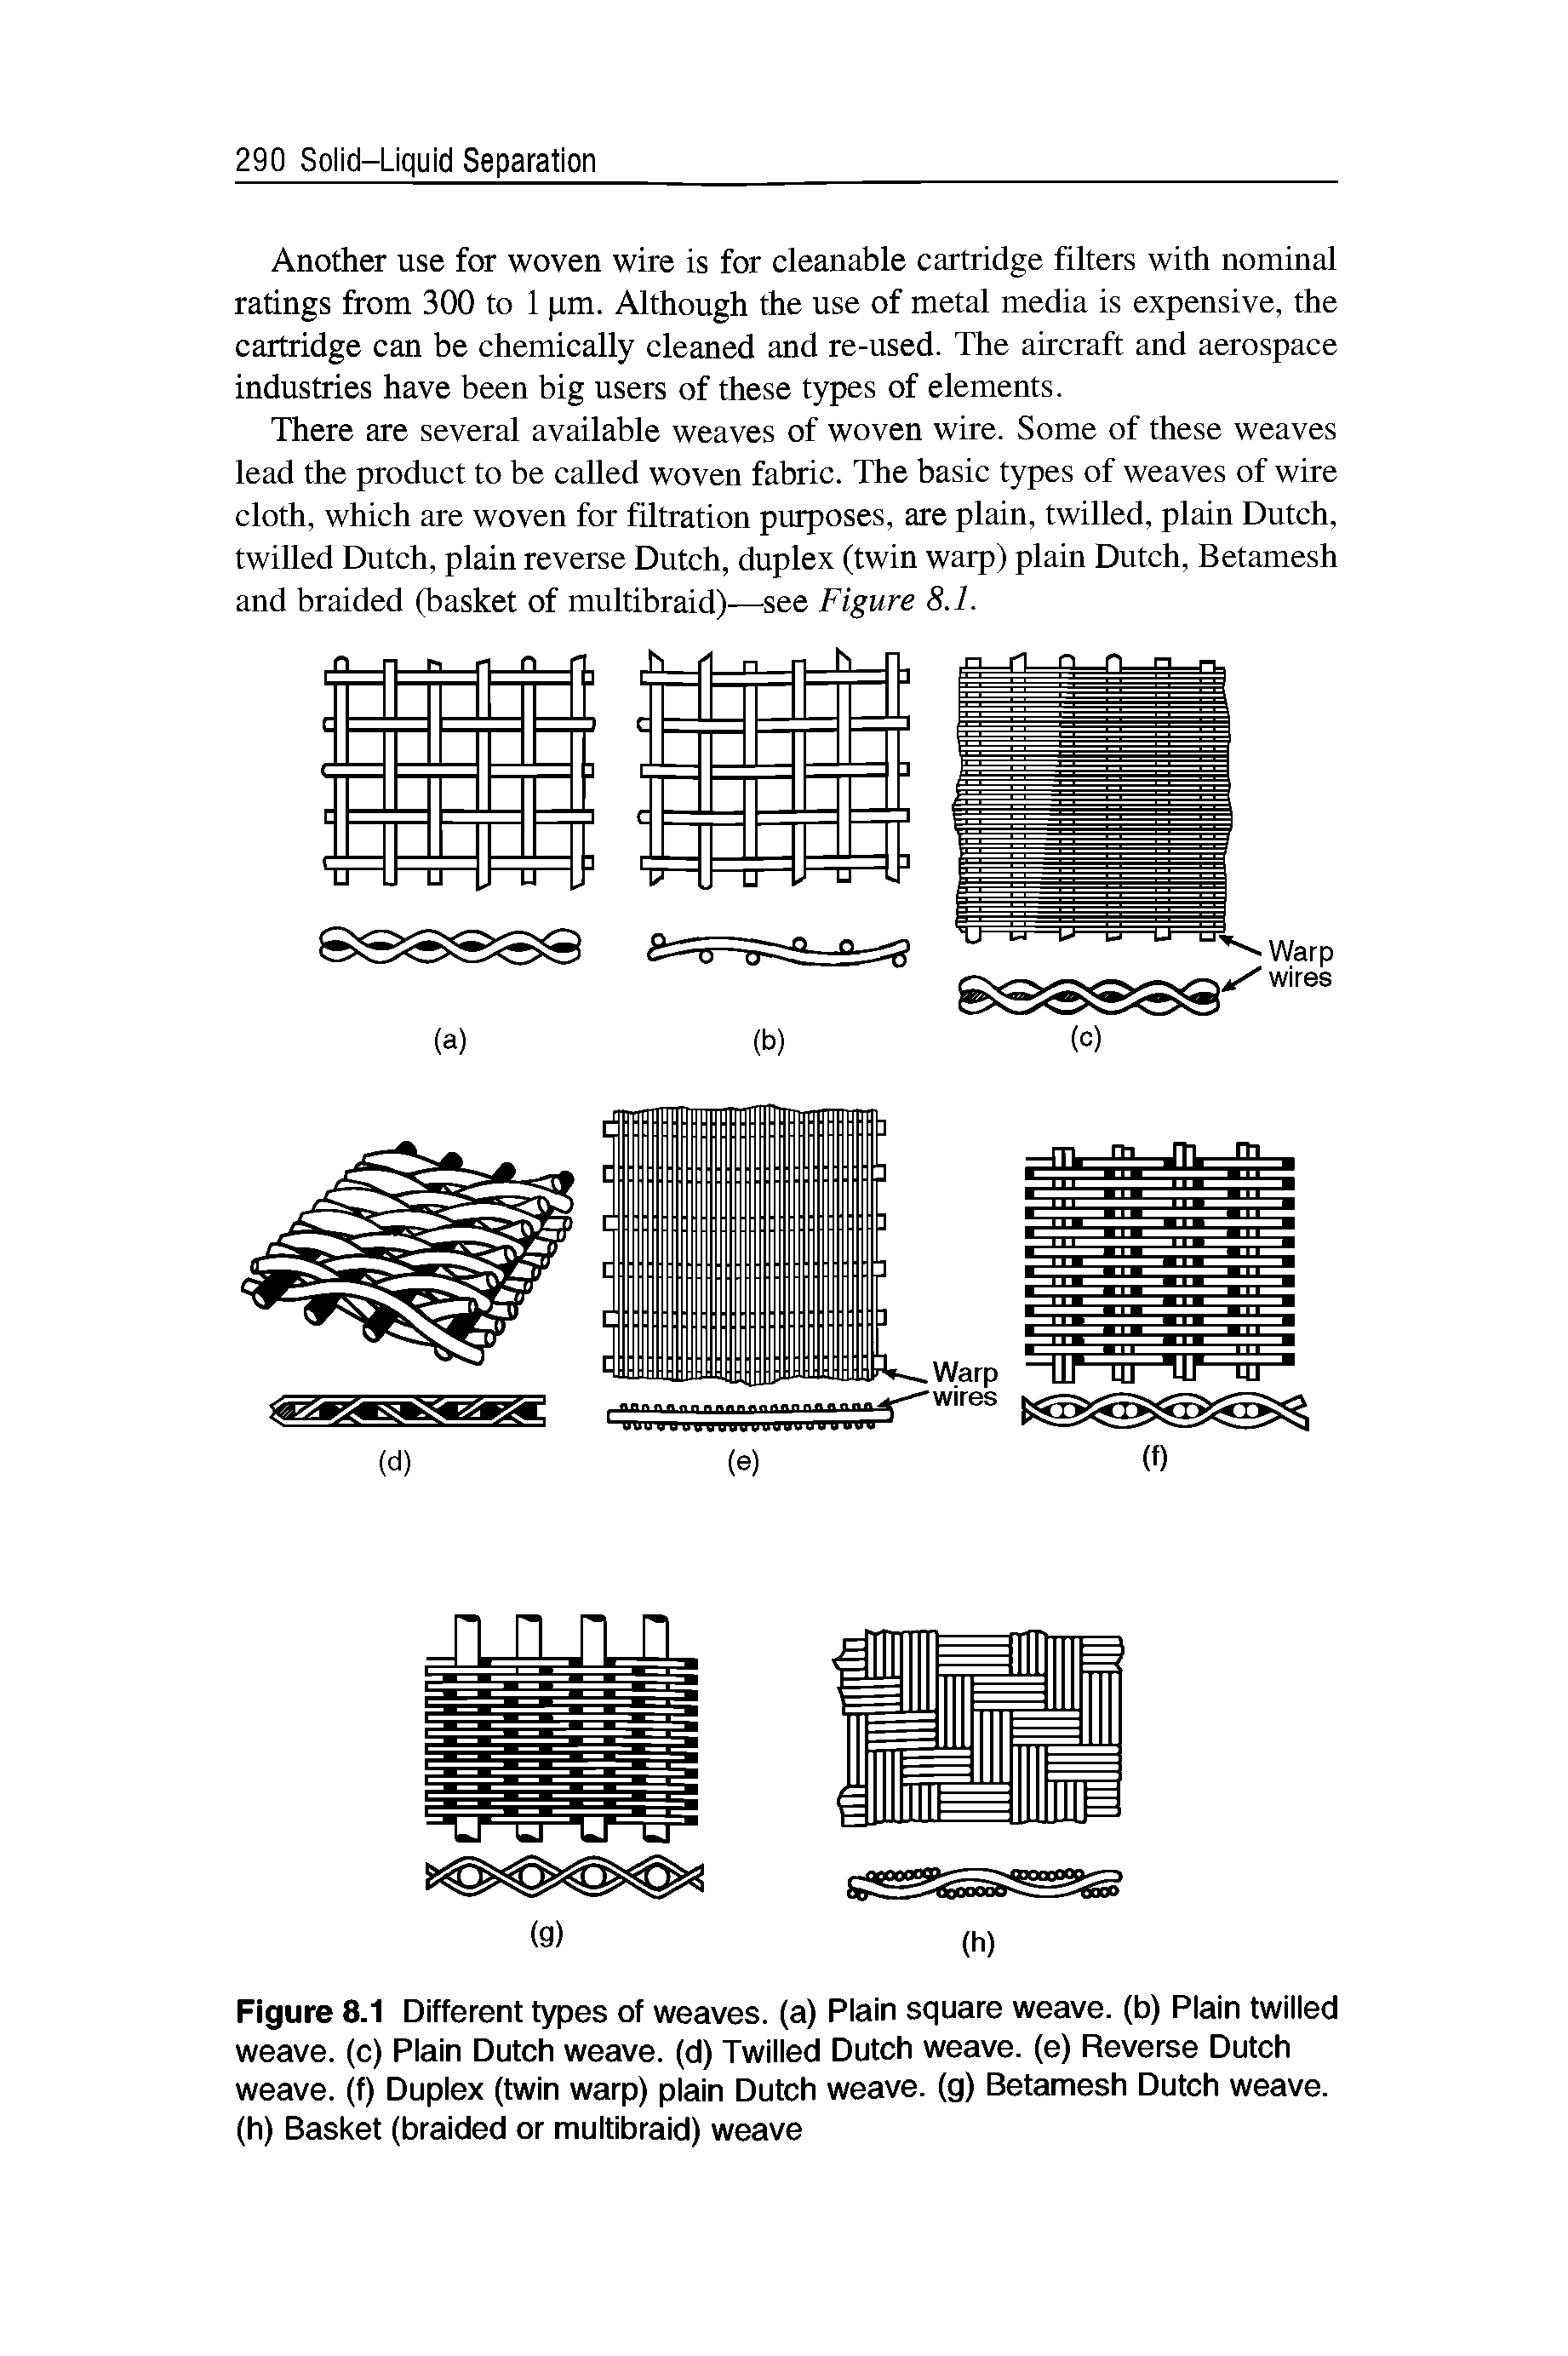 Figure 8.1 Different types of weaves, (a) Plain square weave, (b) Plain twilled weave, (c) Plain Dutch weave, (d) Twilled Dutch weave, (e) Reverse Dutch weave, (f) Duplex (twin warp) plain Dutch weave, (g) Betamesh Dutch weave, (h) Basket (braided or multibraid) weave...